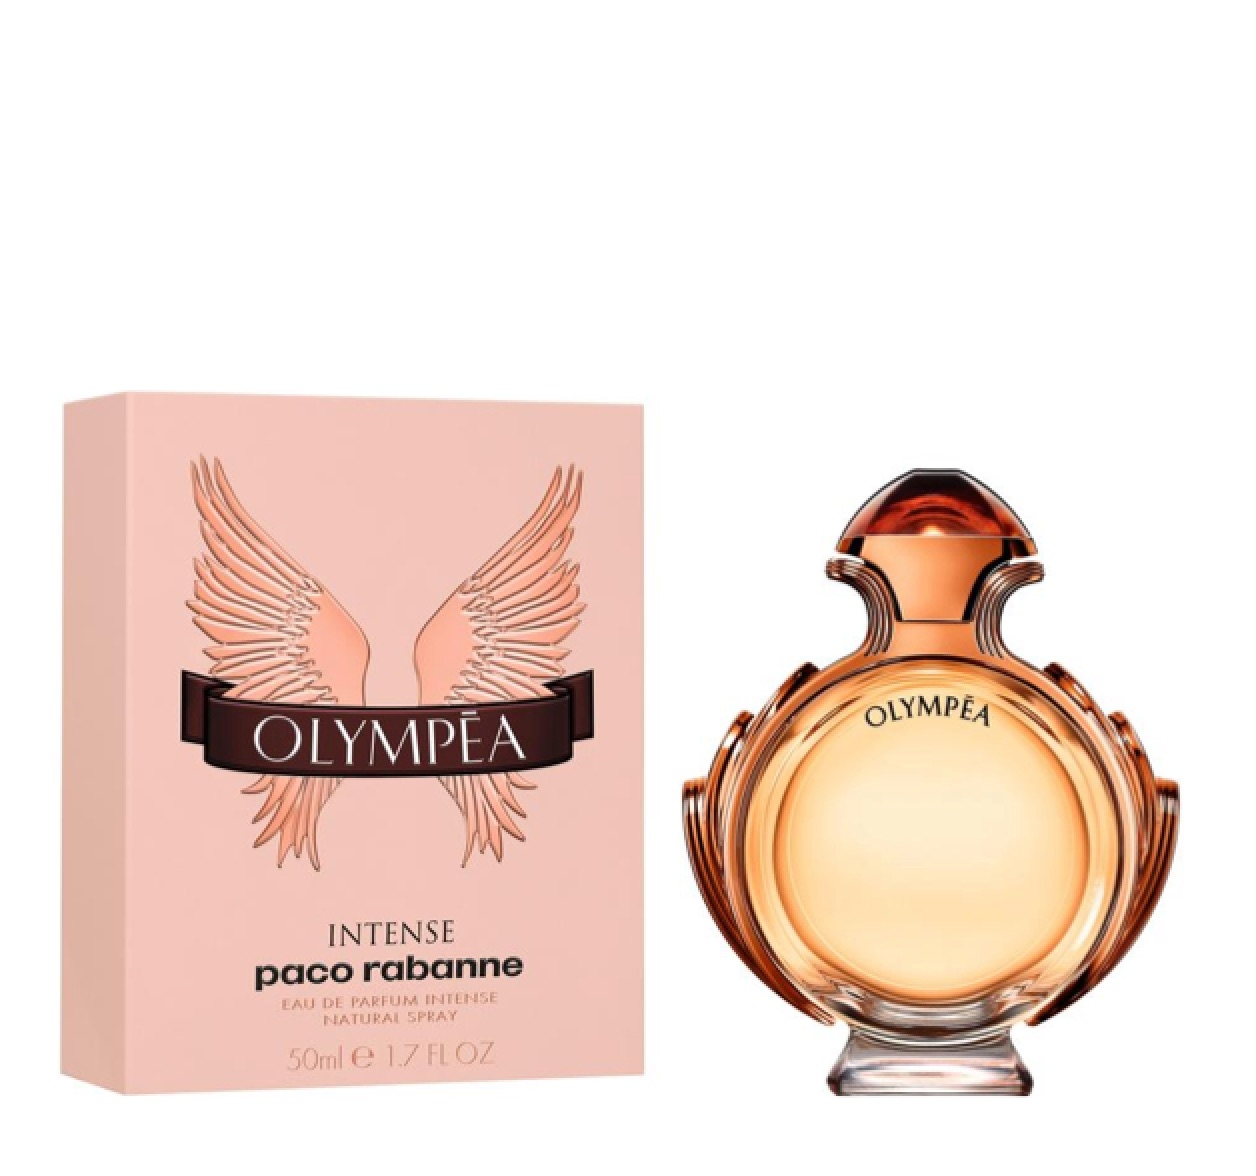 Paco Rabanne Olympea Intense Eau de Parfum Intense 50ml – Perfume Essence